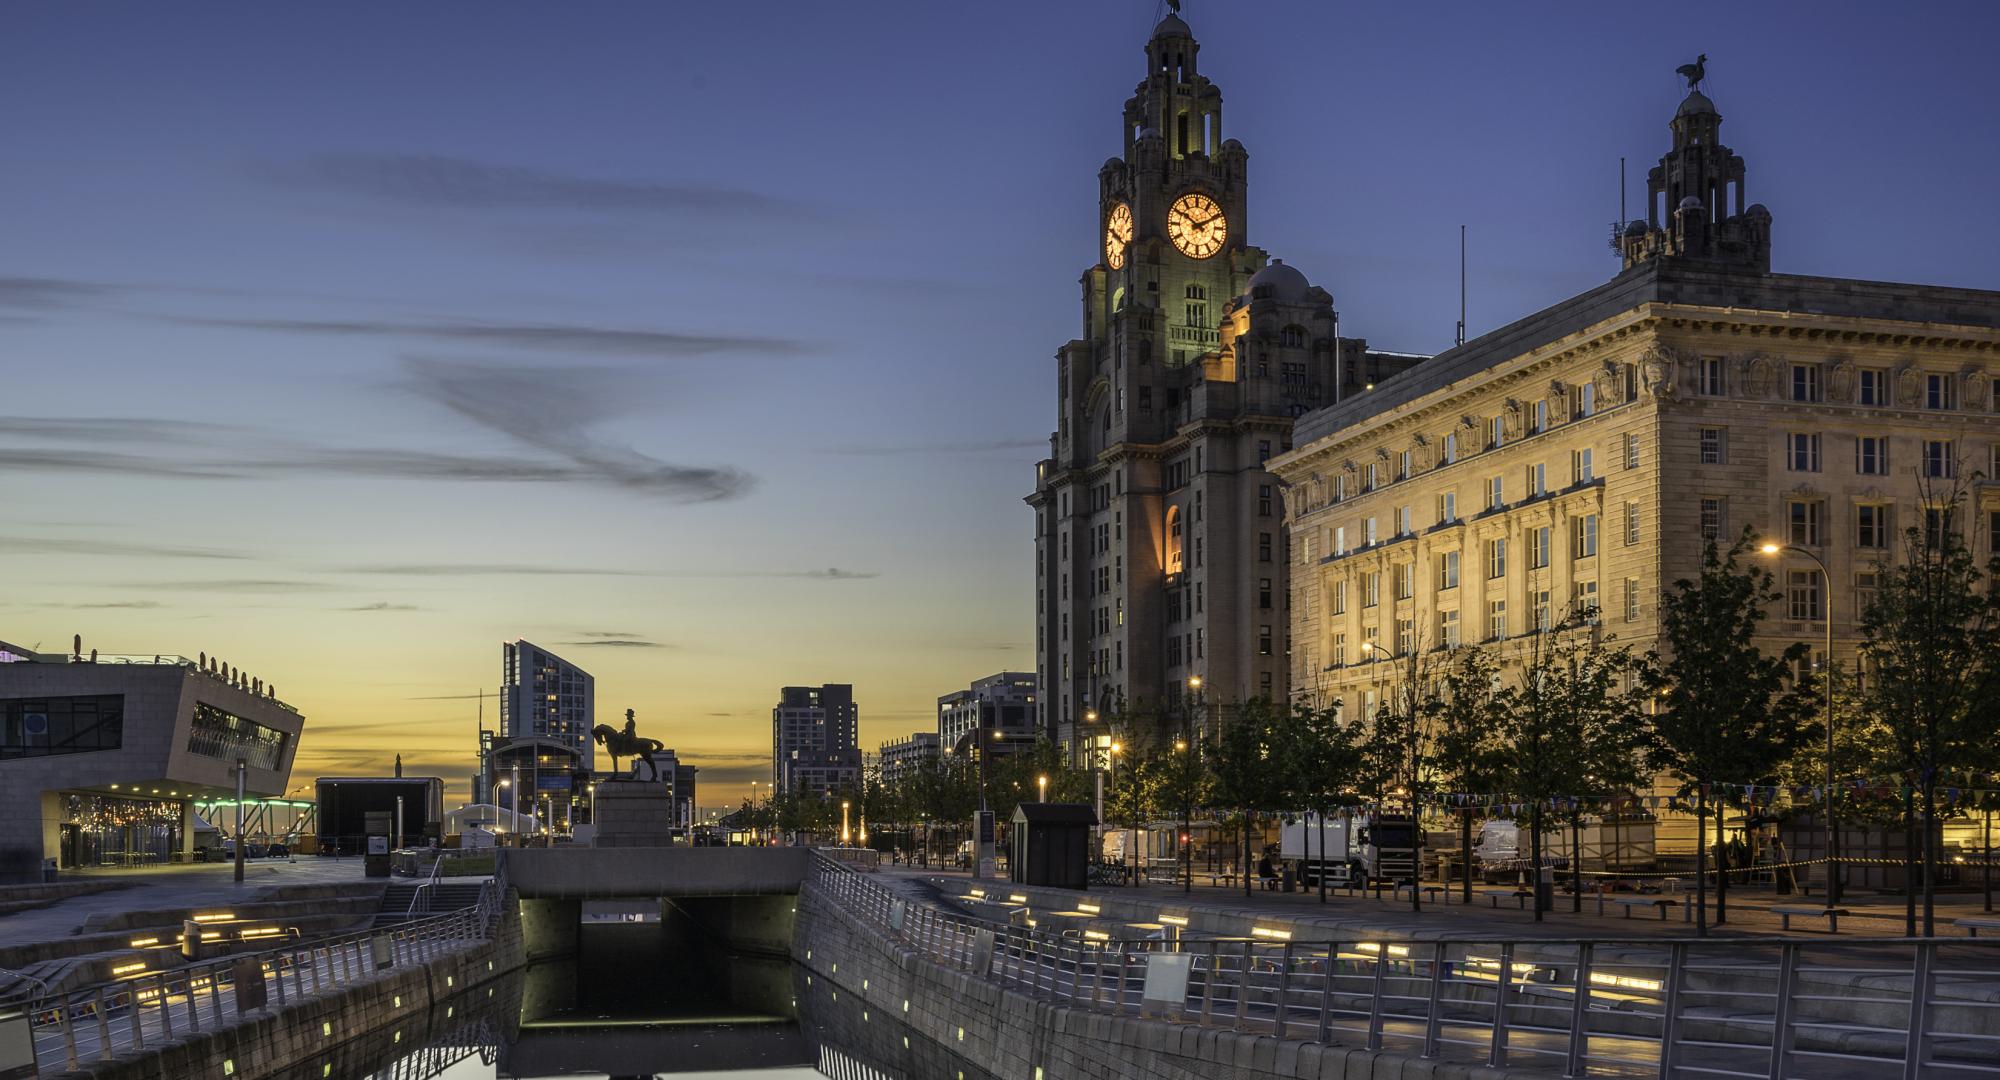 Evening shot of Liverpool